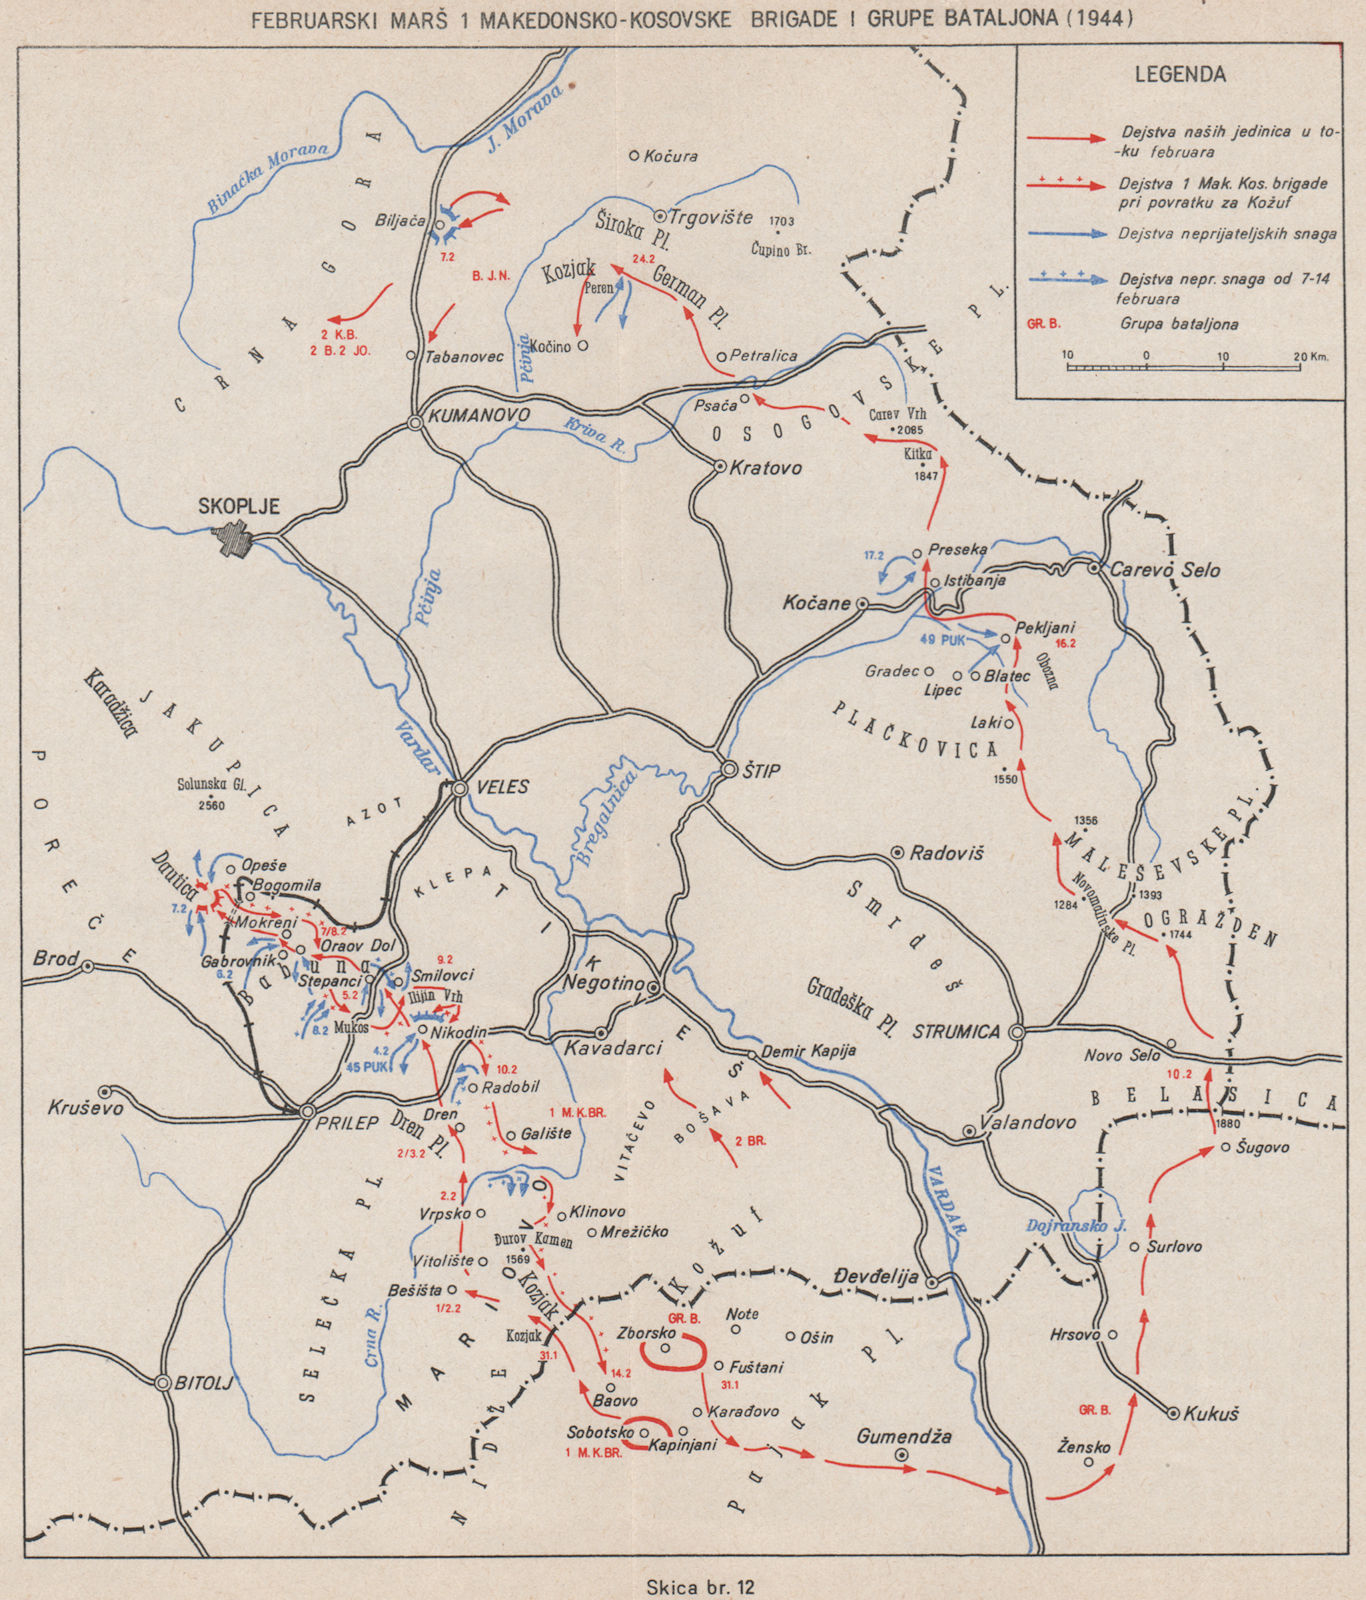 MACEDONIA/KOSOVO. Combat operations Feb-Mar 1944. Veles Prilep Kocane 1957 map